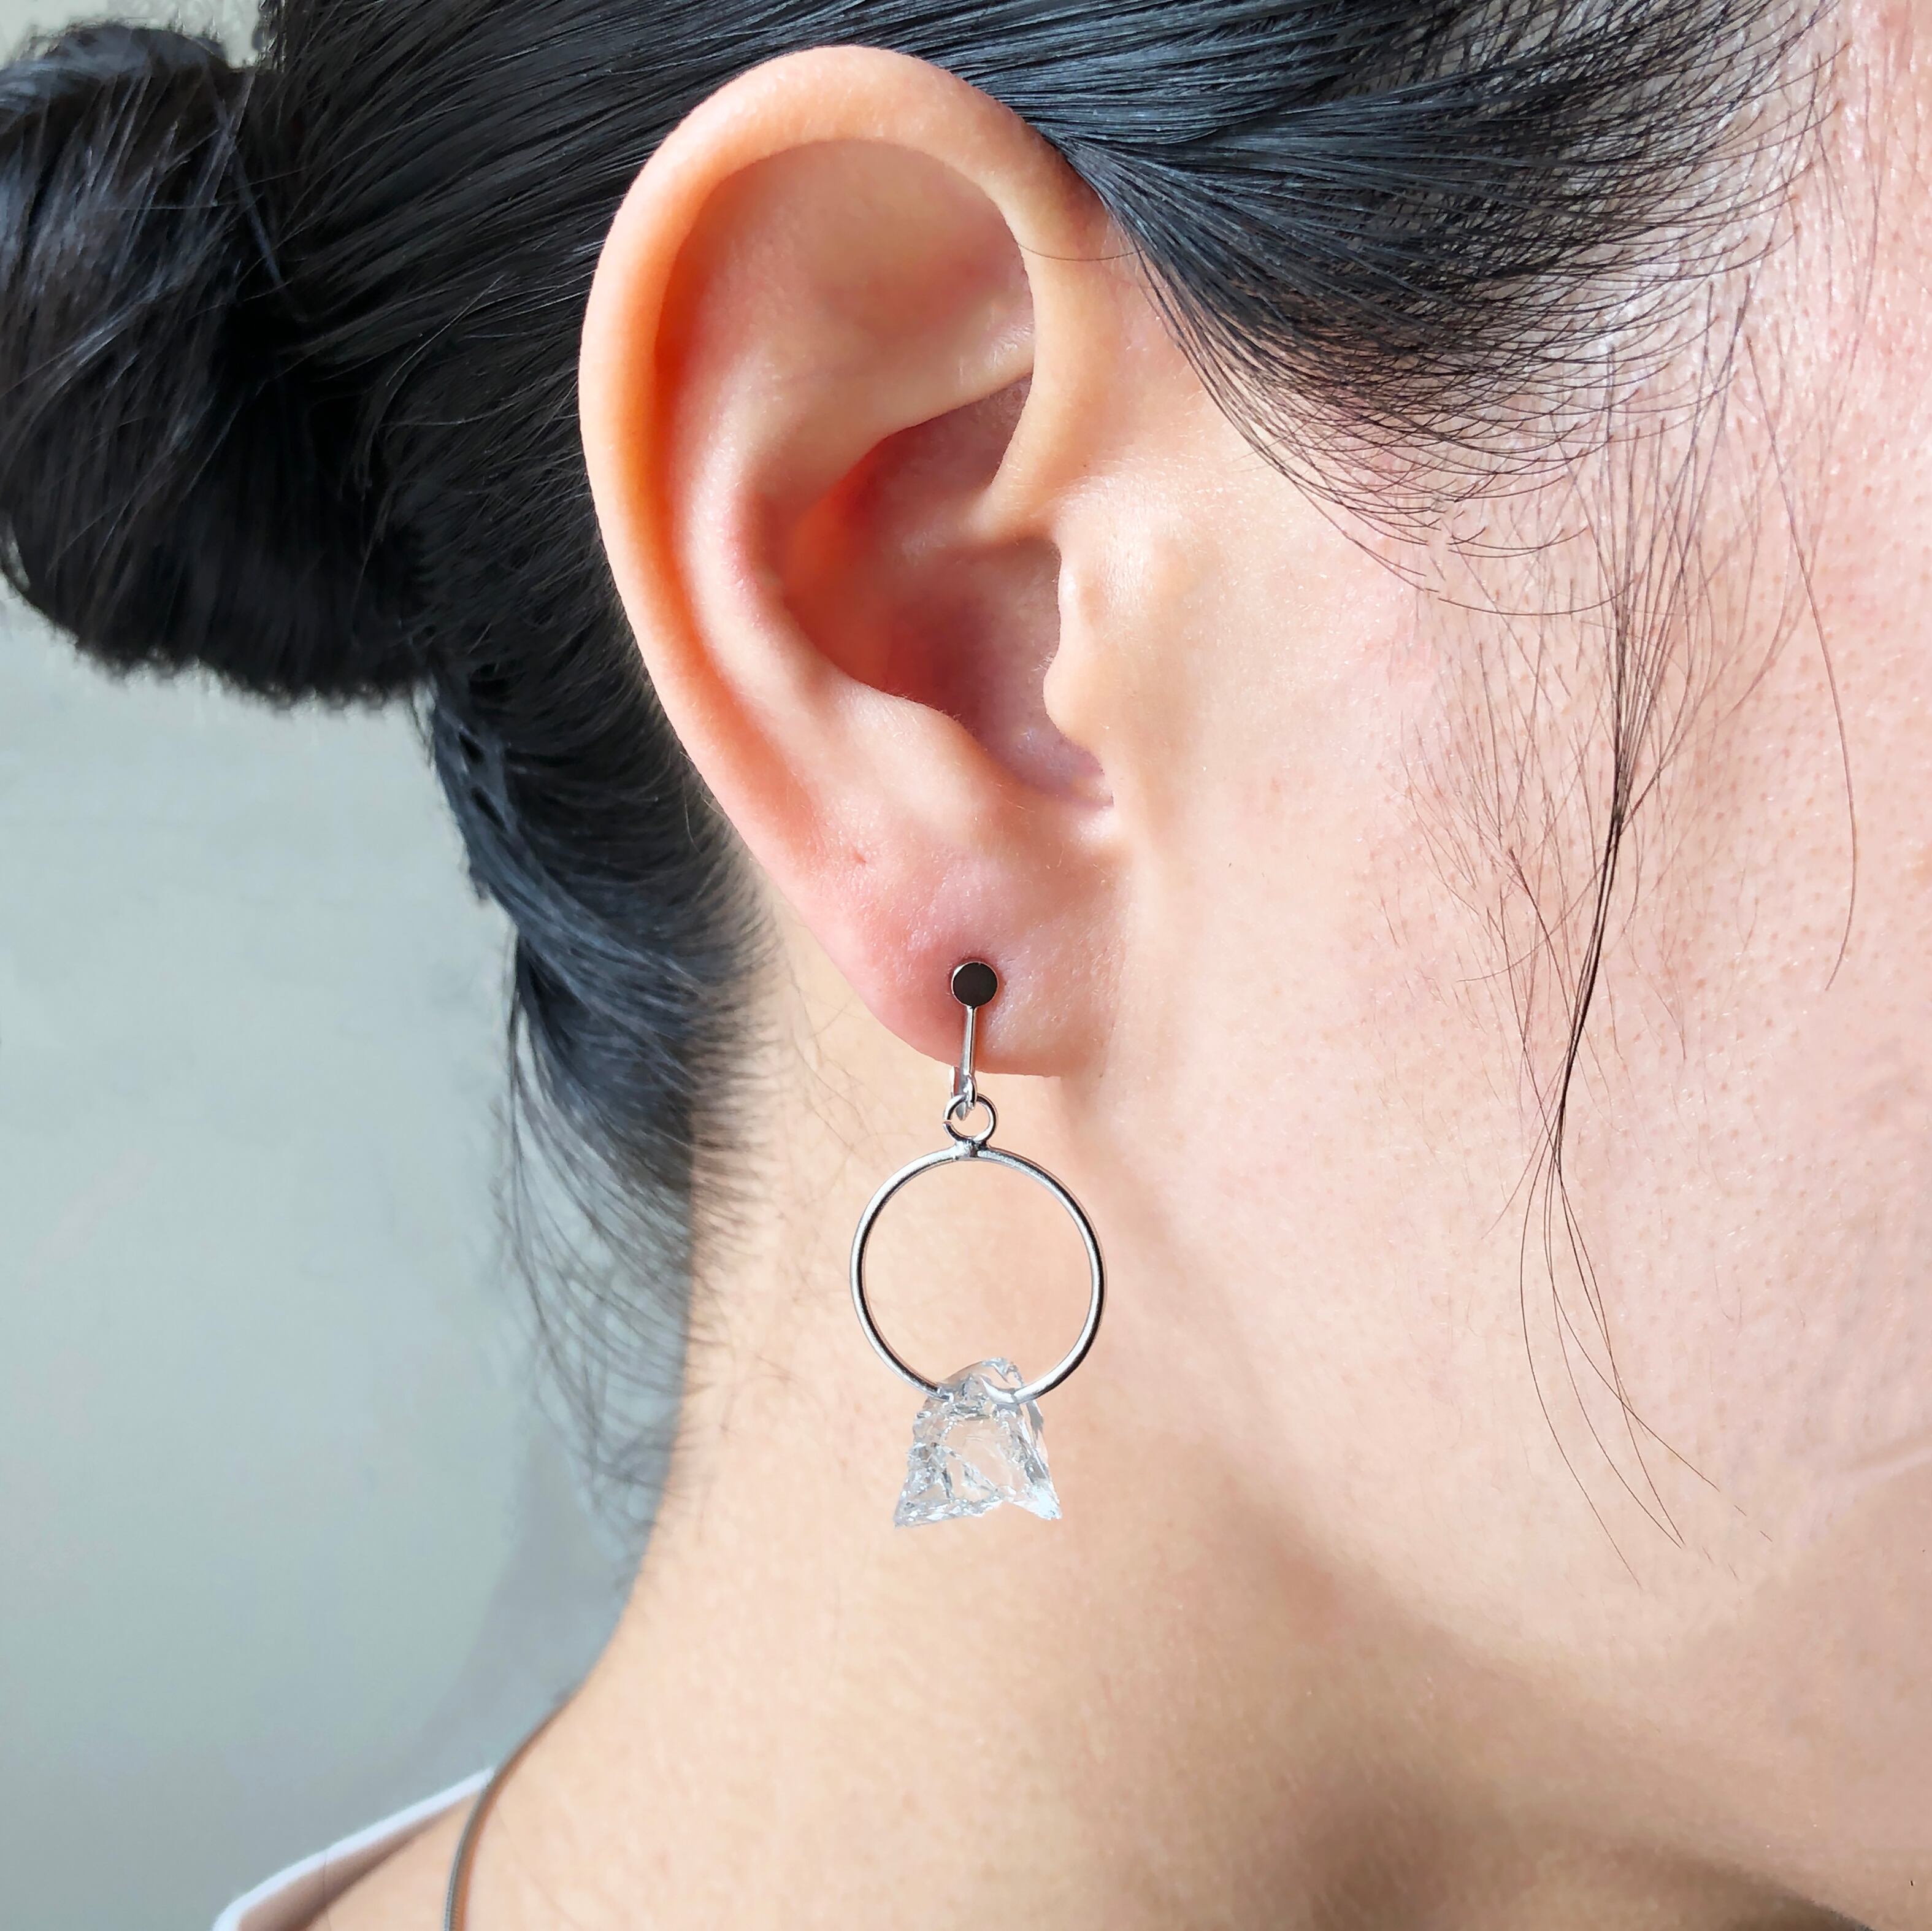 【ONLINE shop限定】FRAGMENT earring 09